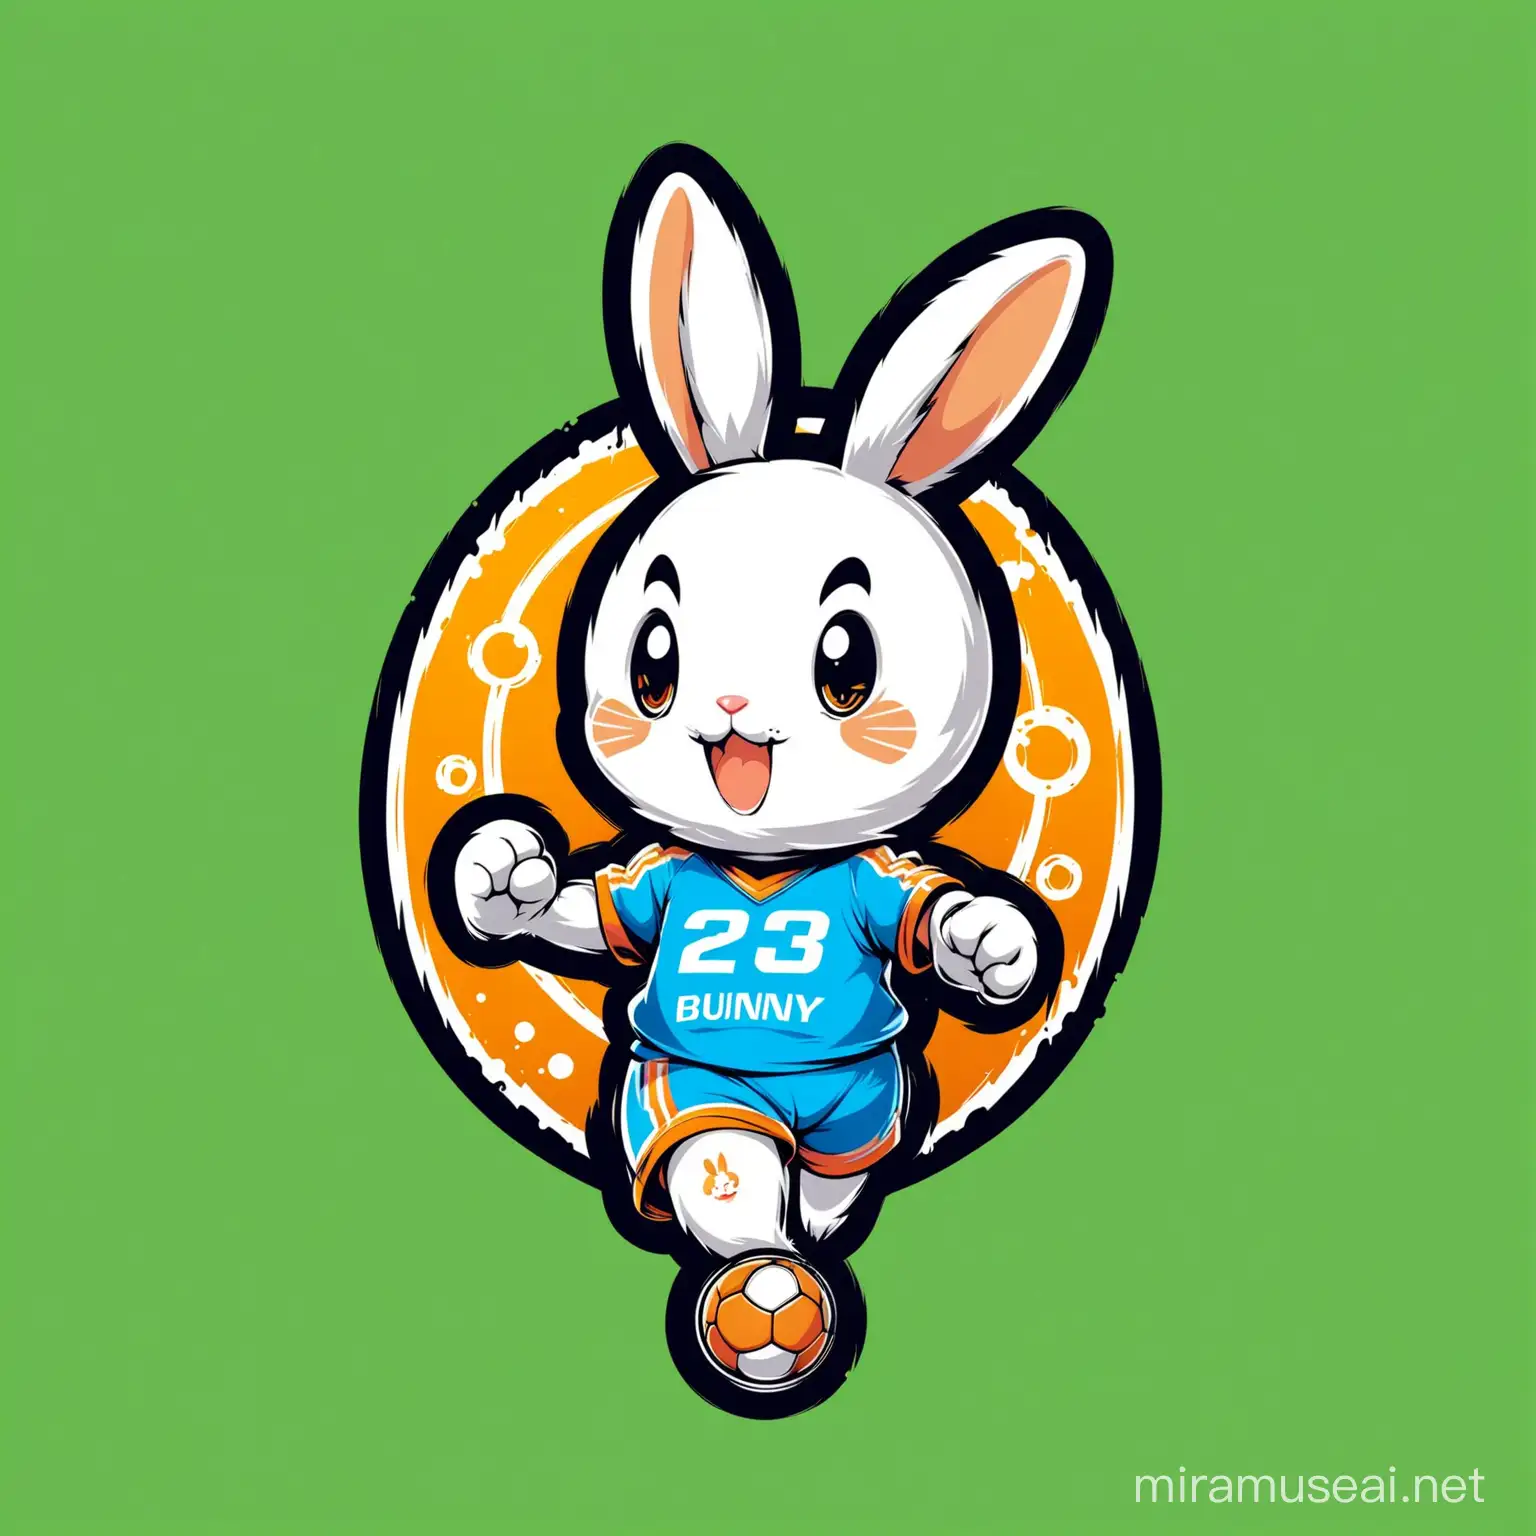 Sporty Bunny Mascot Logo with Full Body Illustration